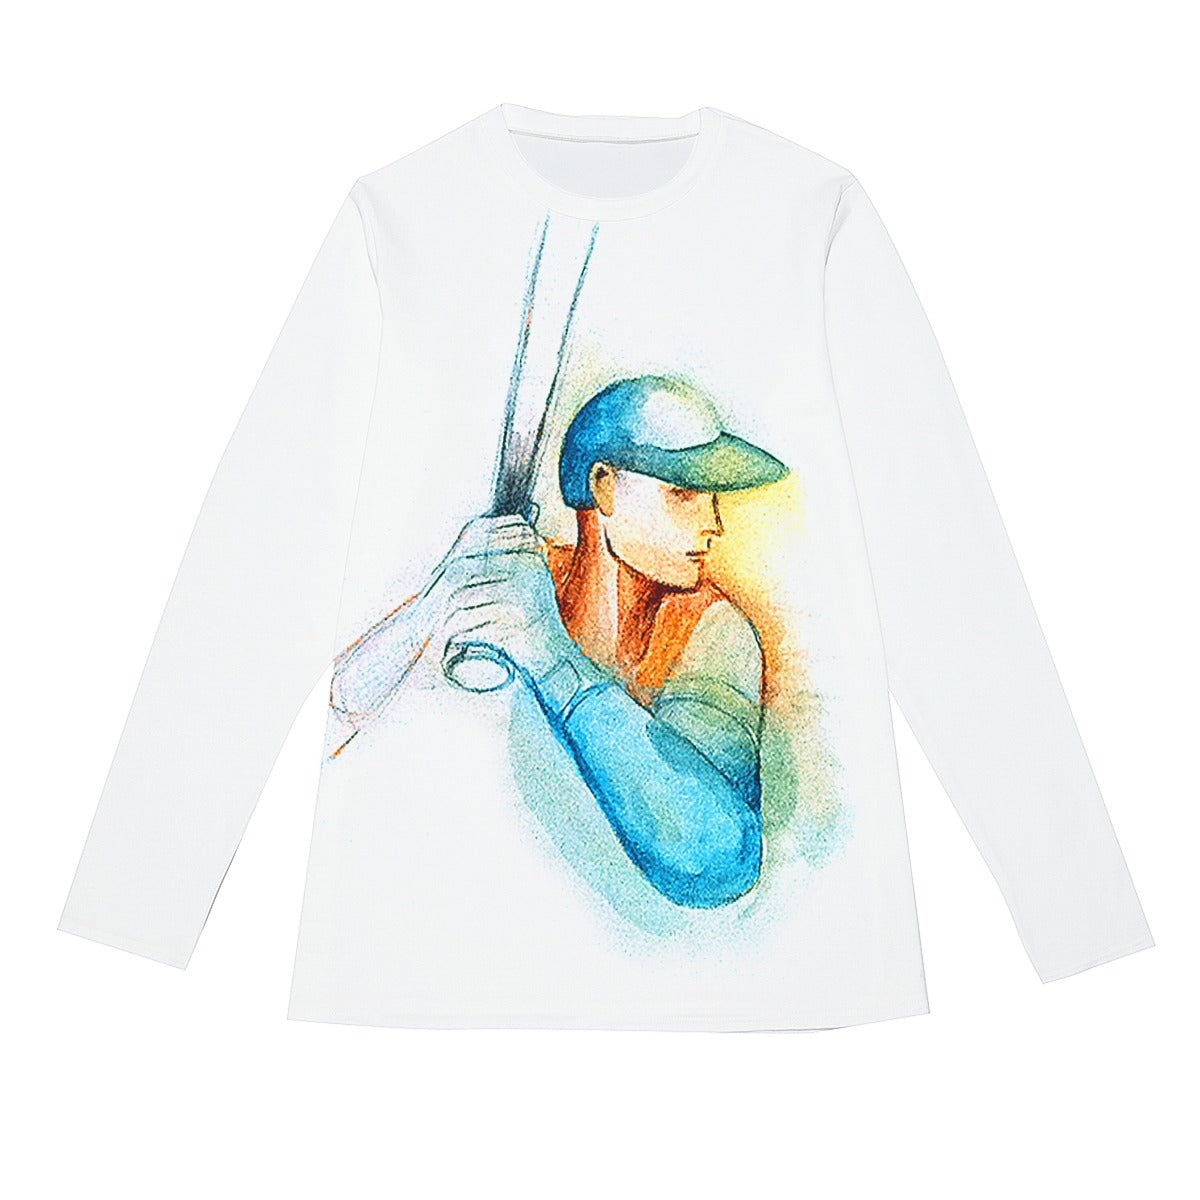 Baseball Player Painting on Men's Cotton Long Sleeve T-Shirt (Logo on Back)